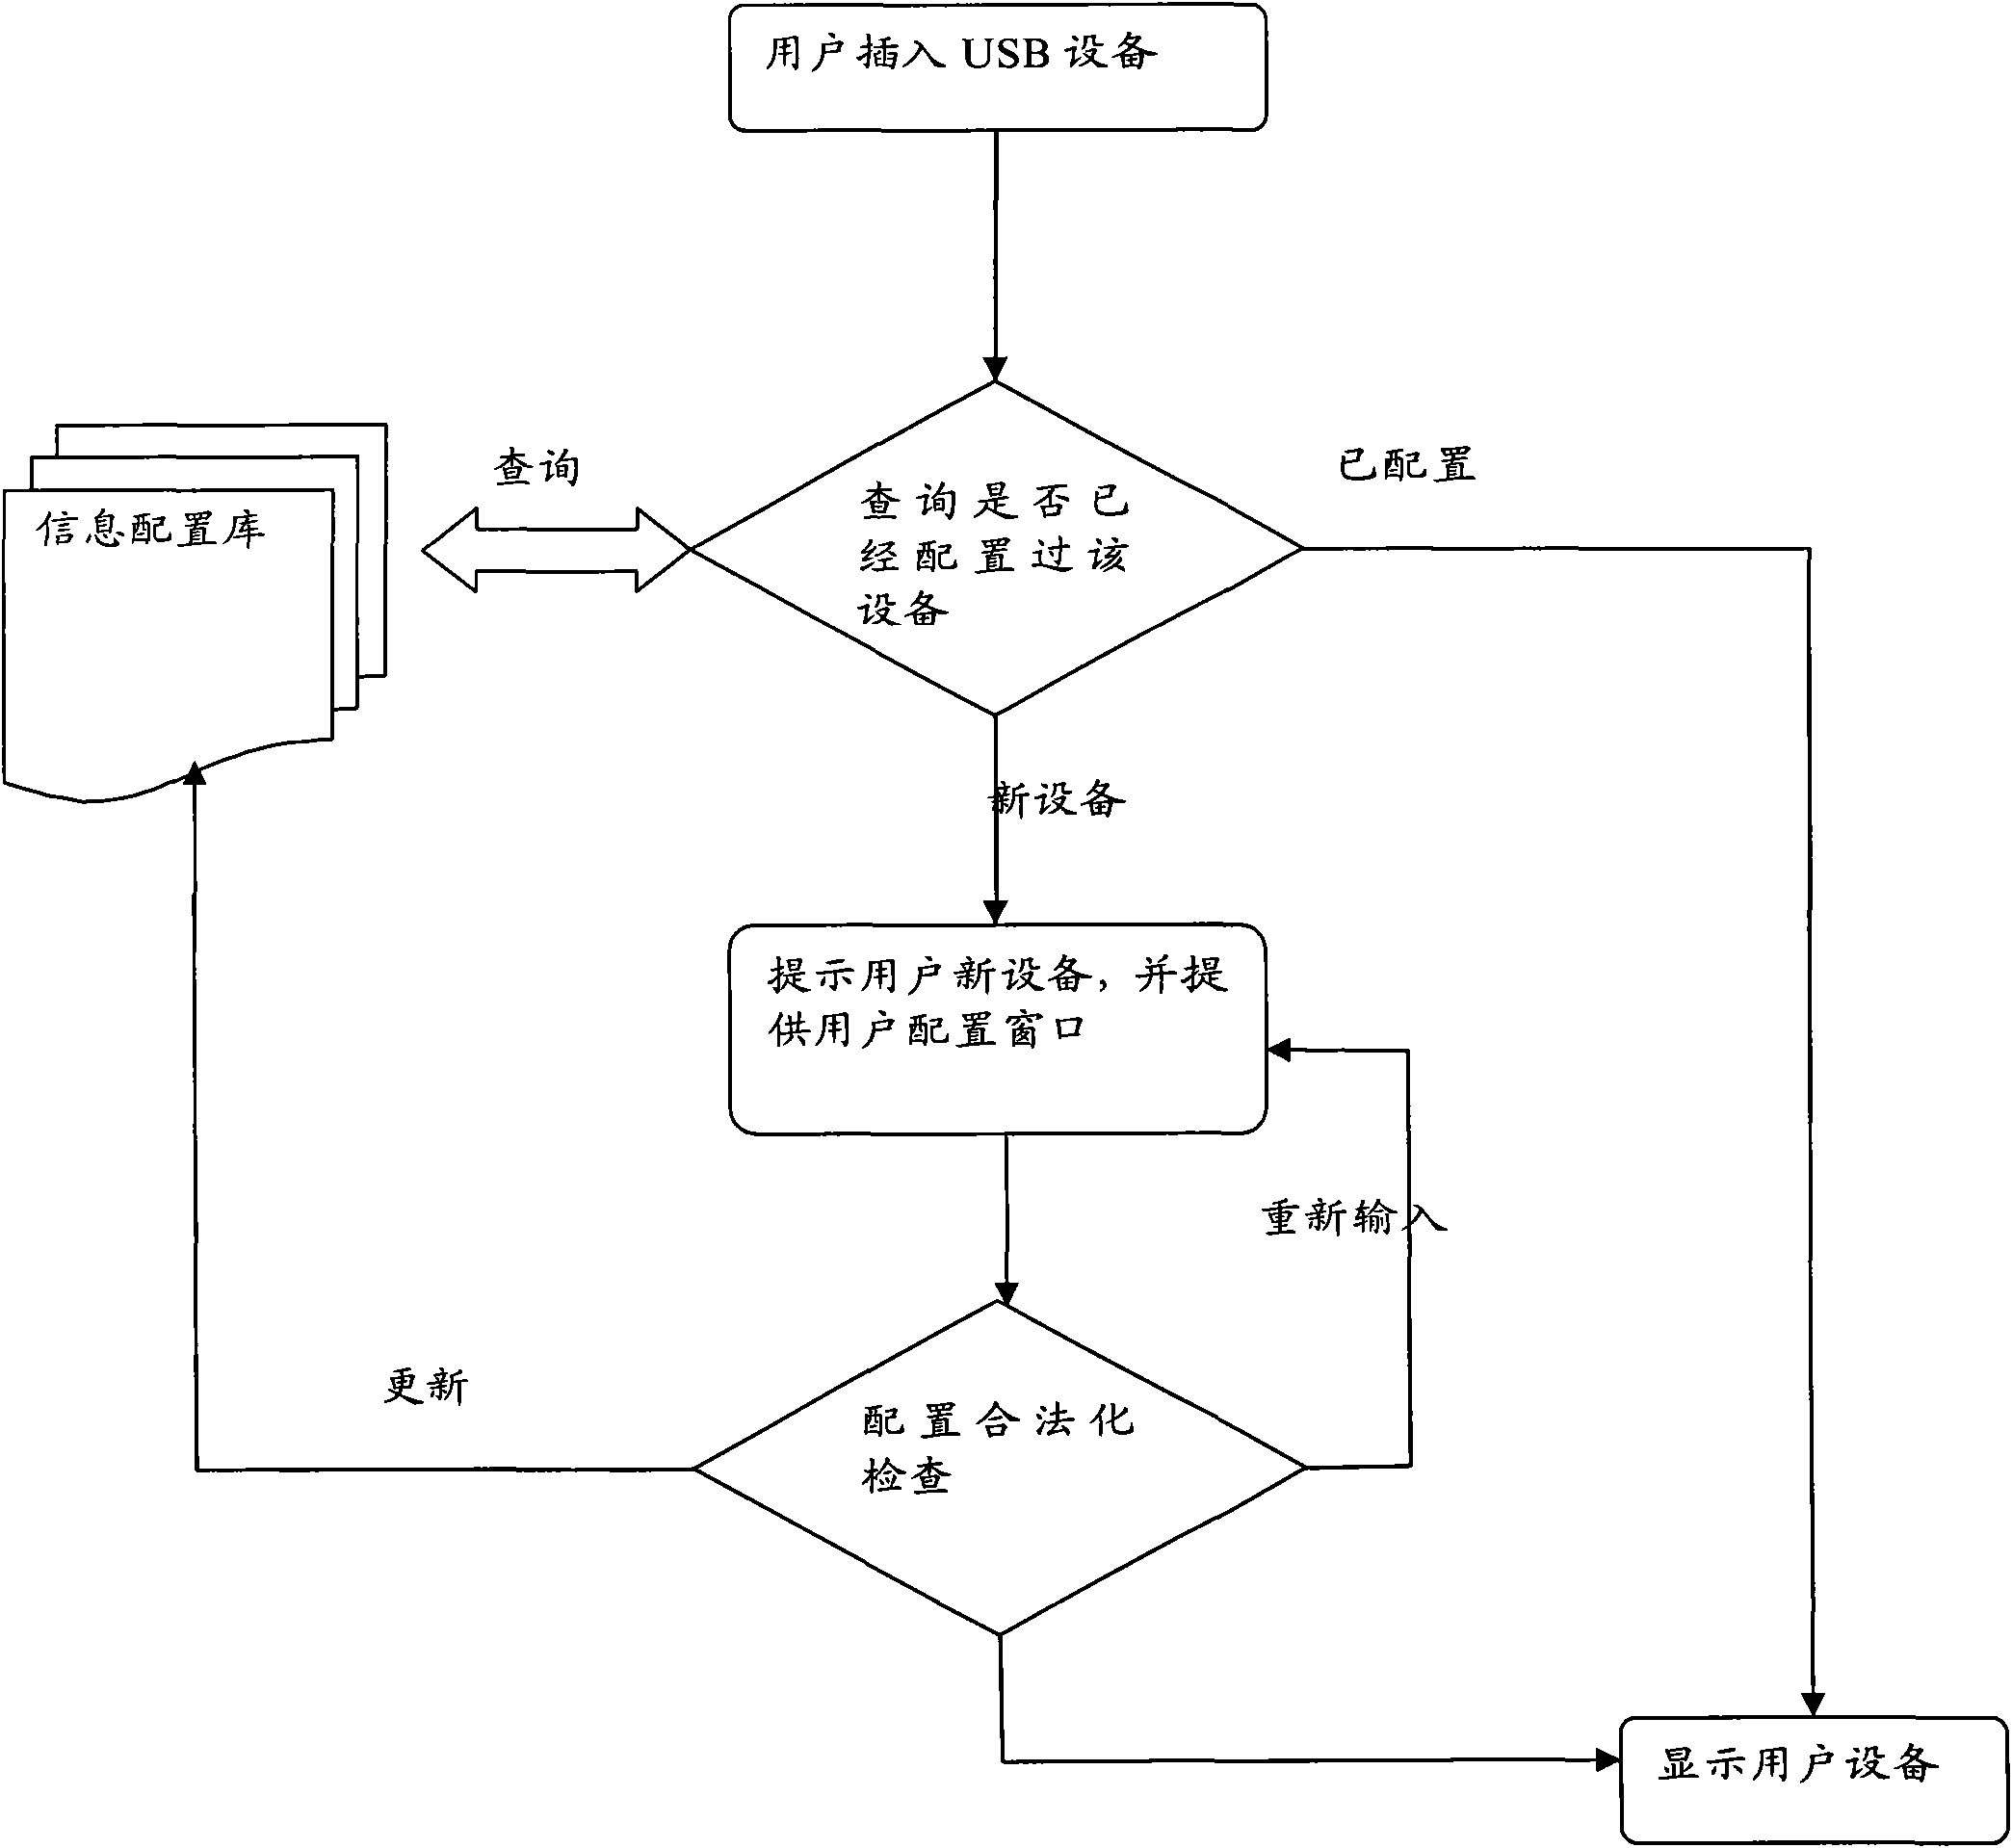 Method for managing external equipment of computer